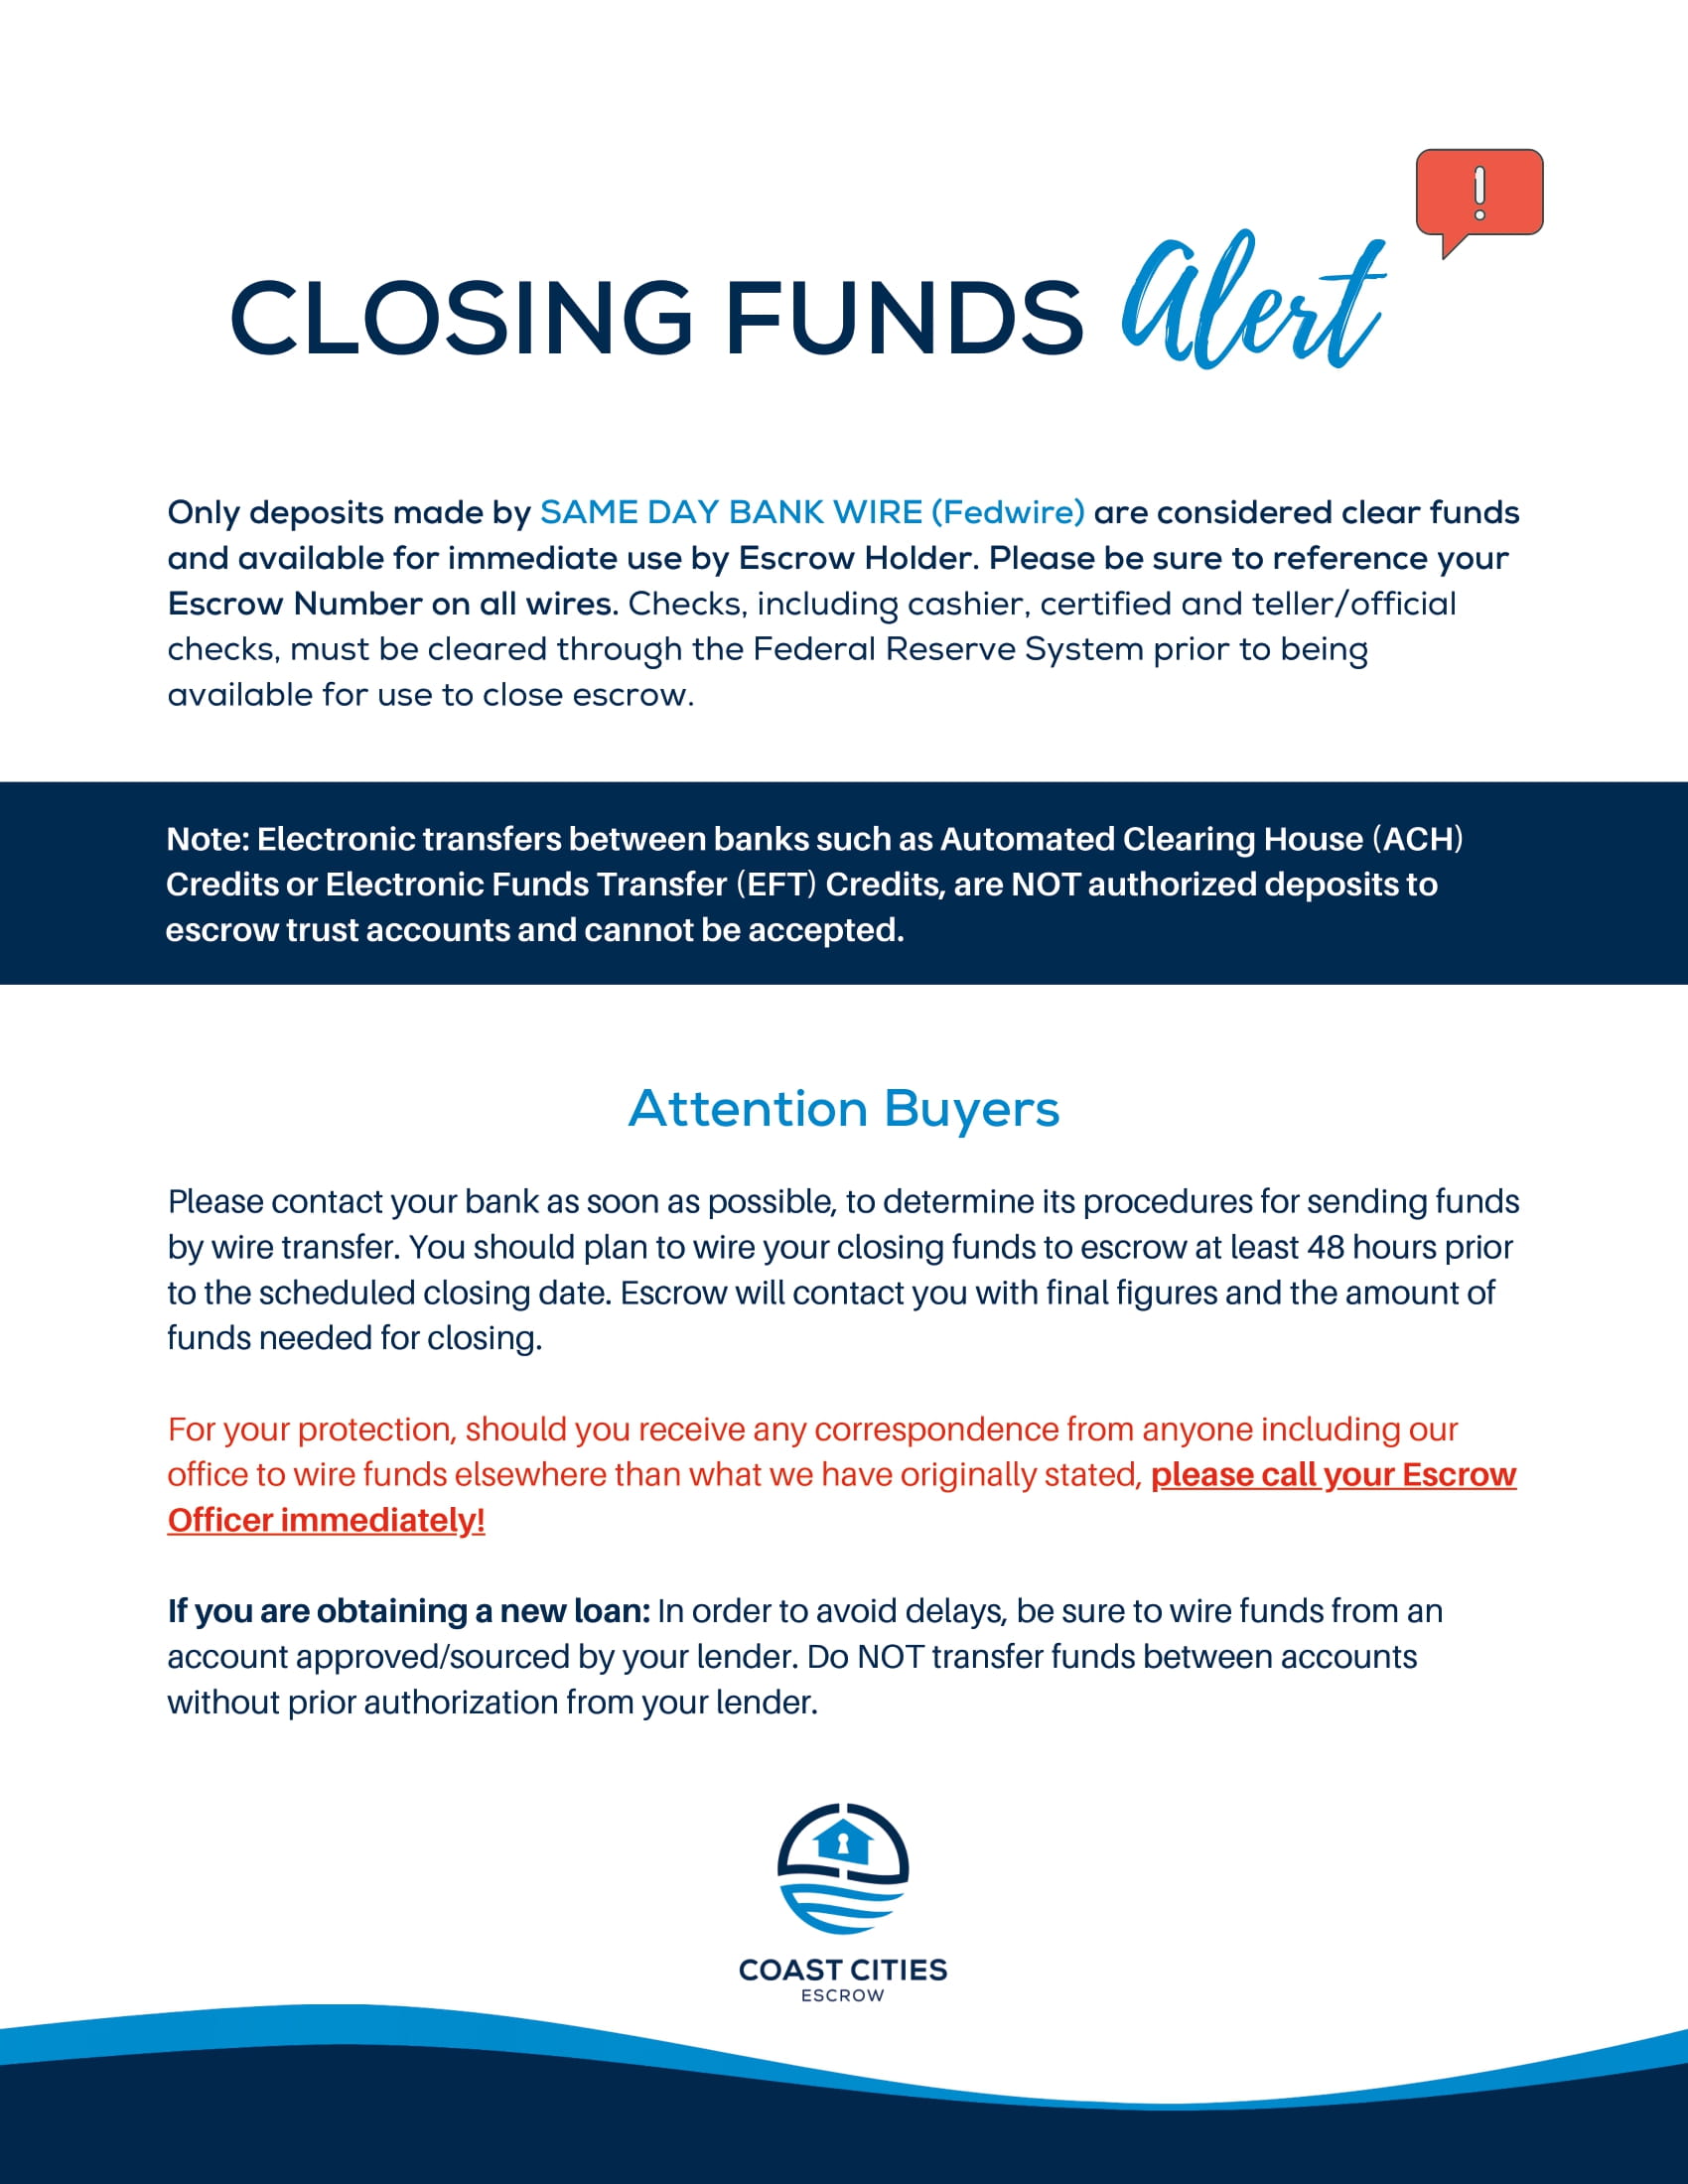 closing funds alert